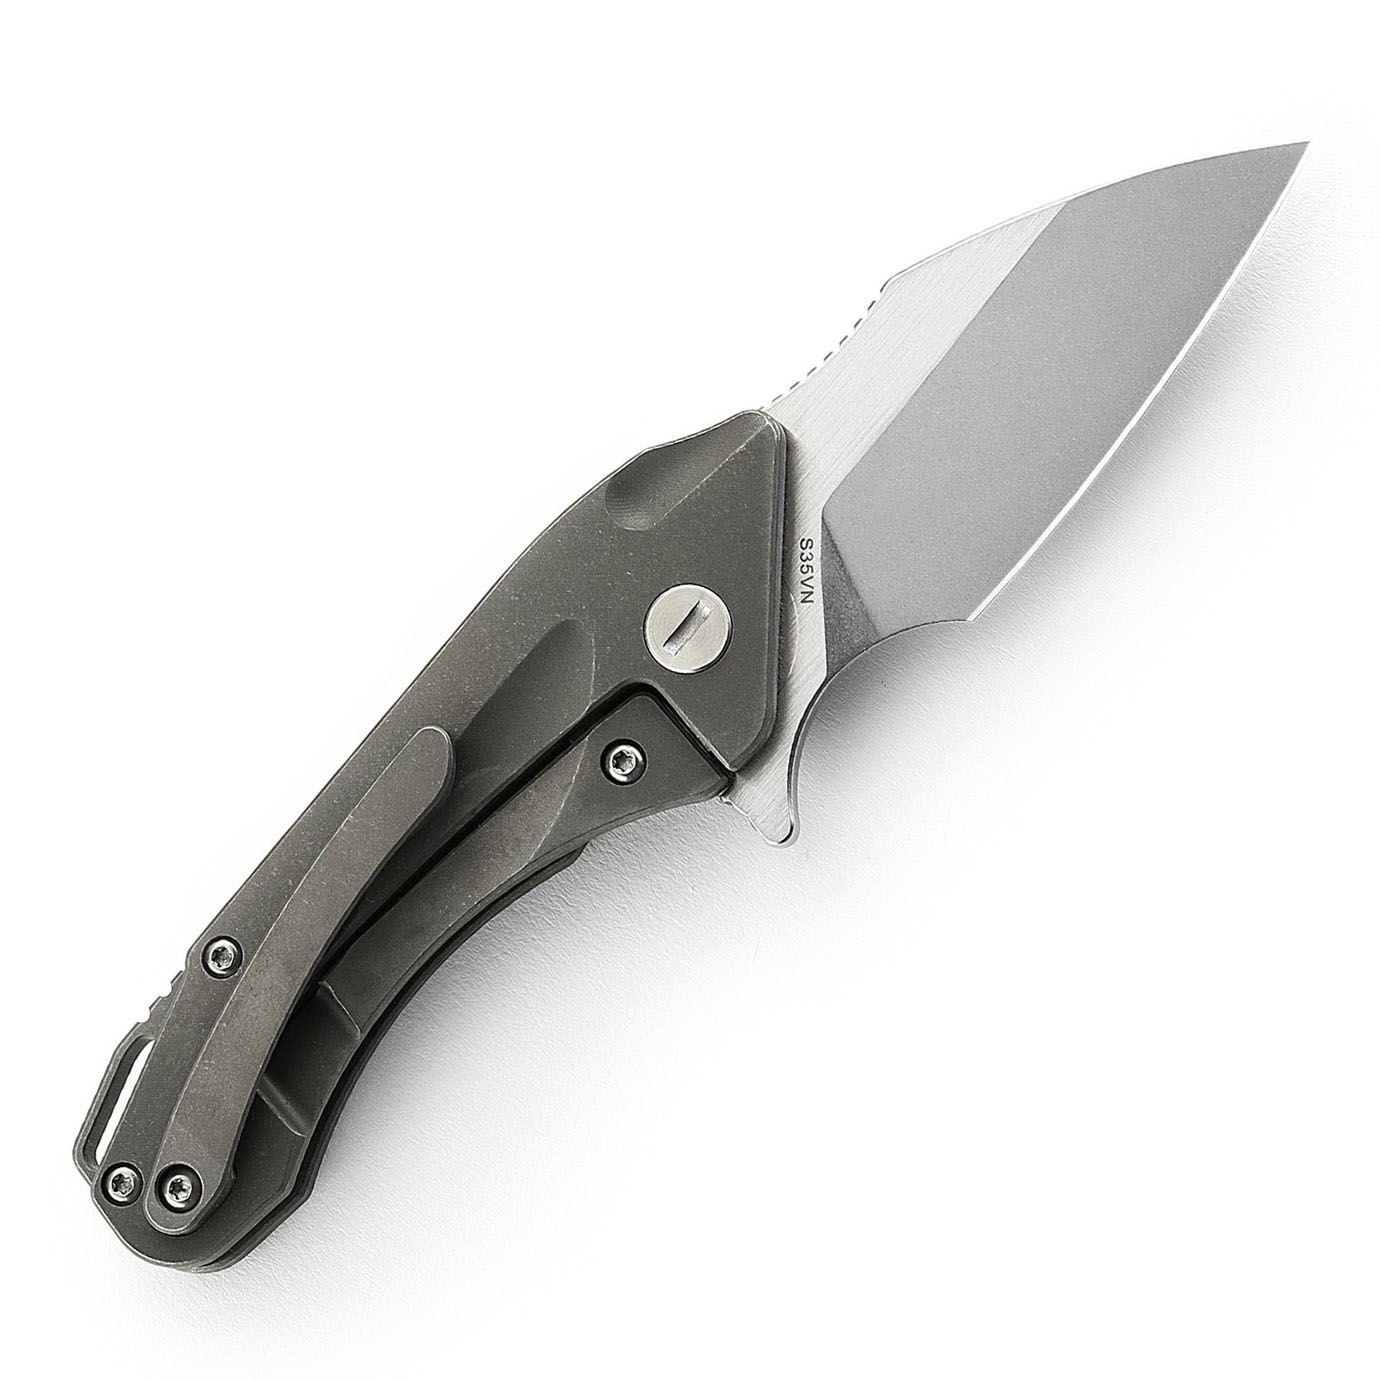 Bestech Knives Goblin CPM-S35VN钢 钛合金镶嵌碳纤维柄 BT1711E 1180